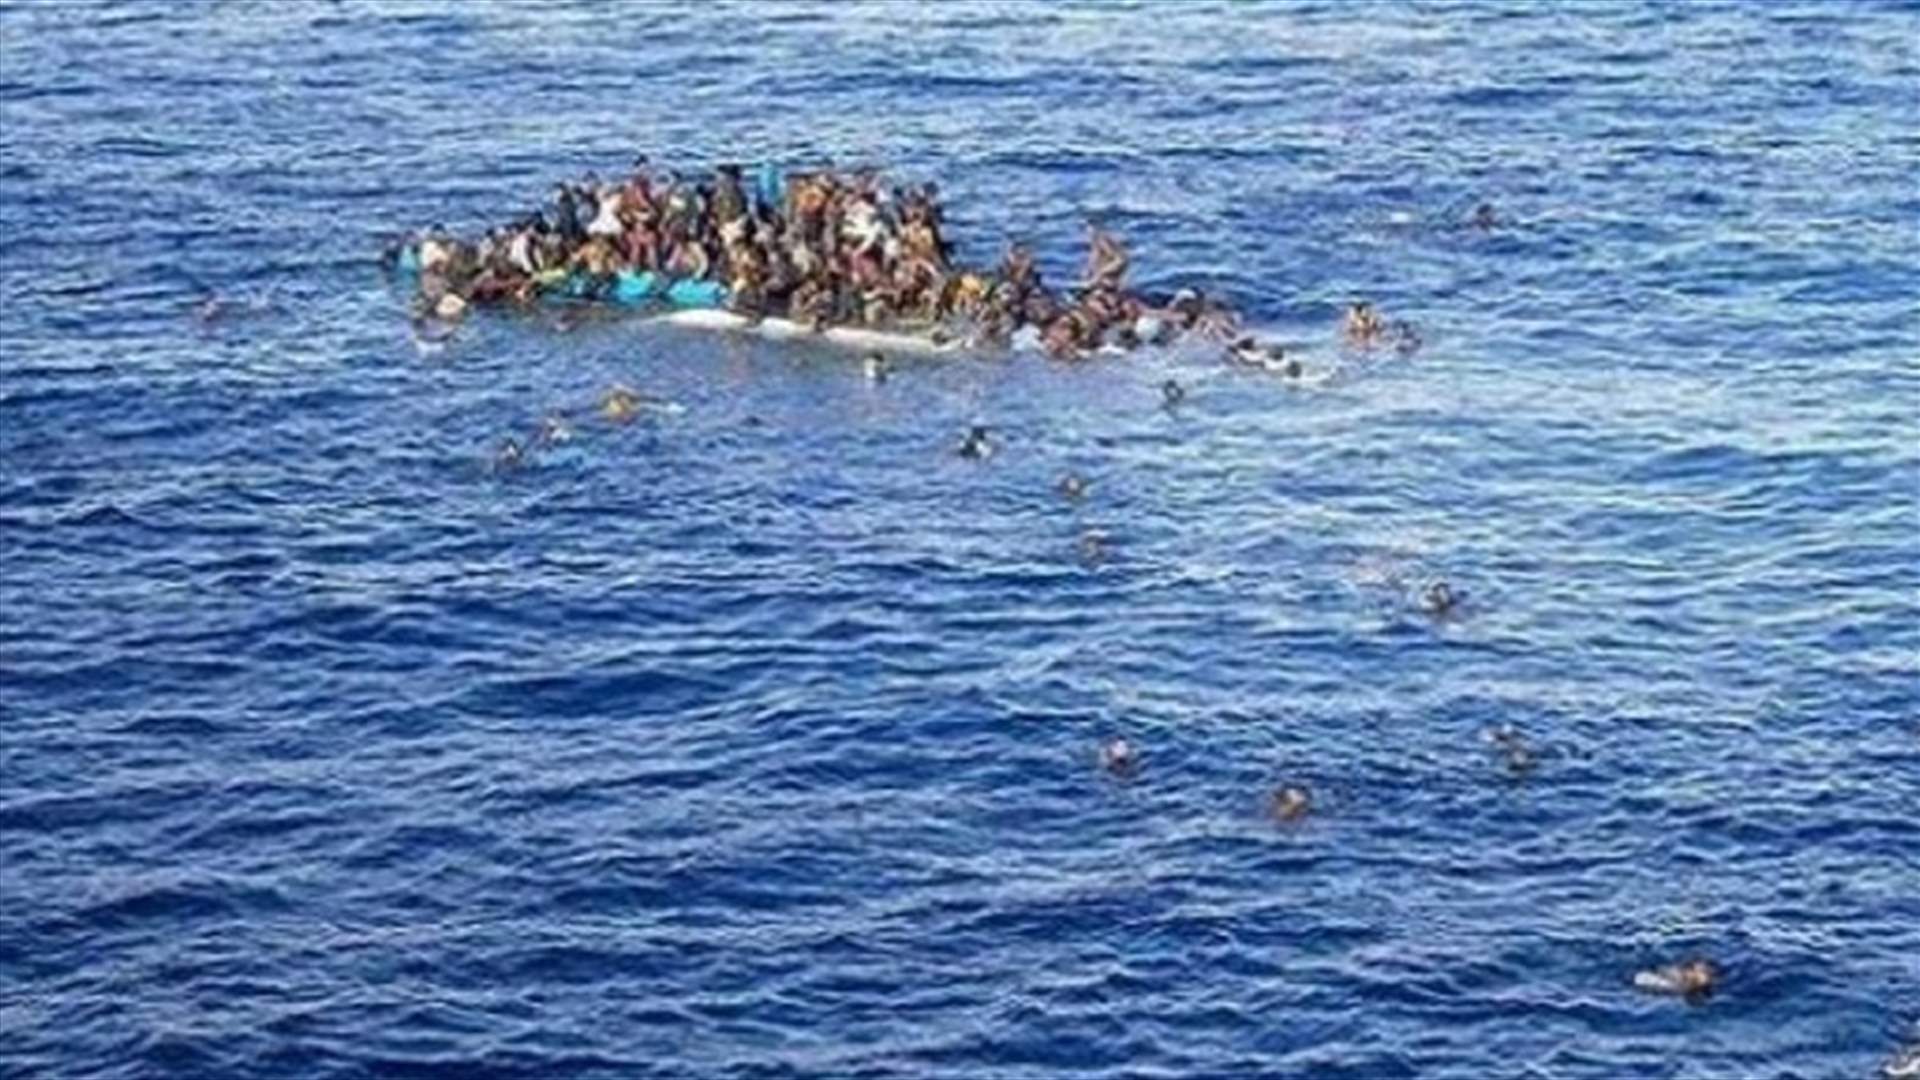 More than 90 migrants believed missing after boat sinks off Libya -coastguard